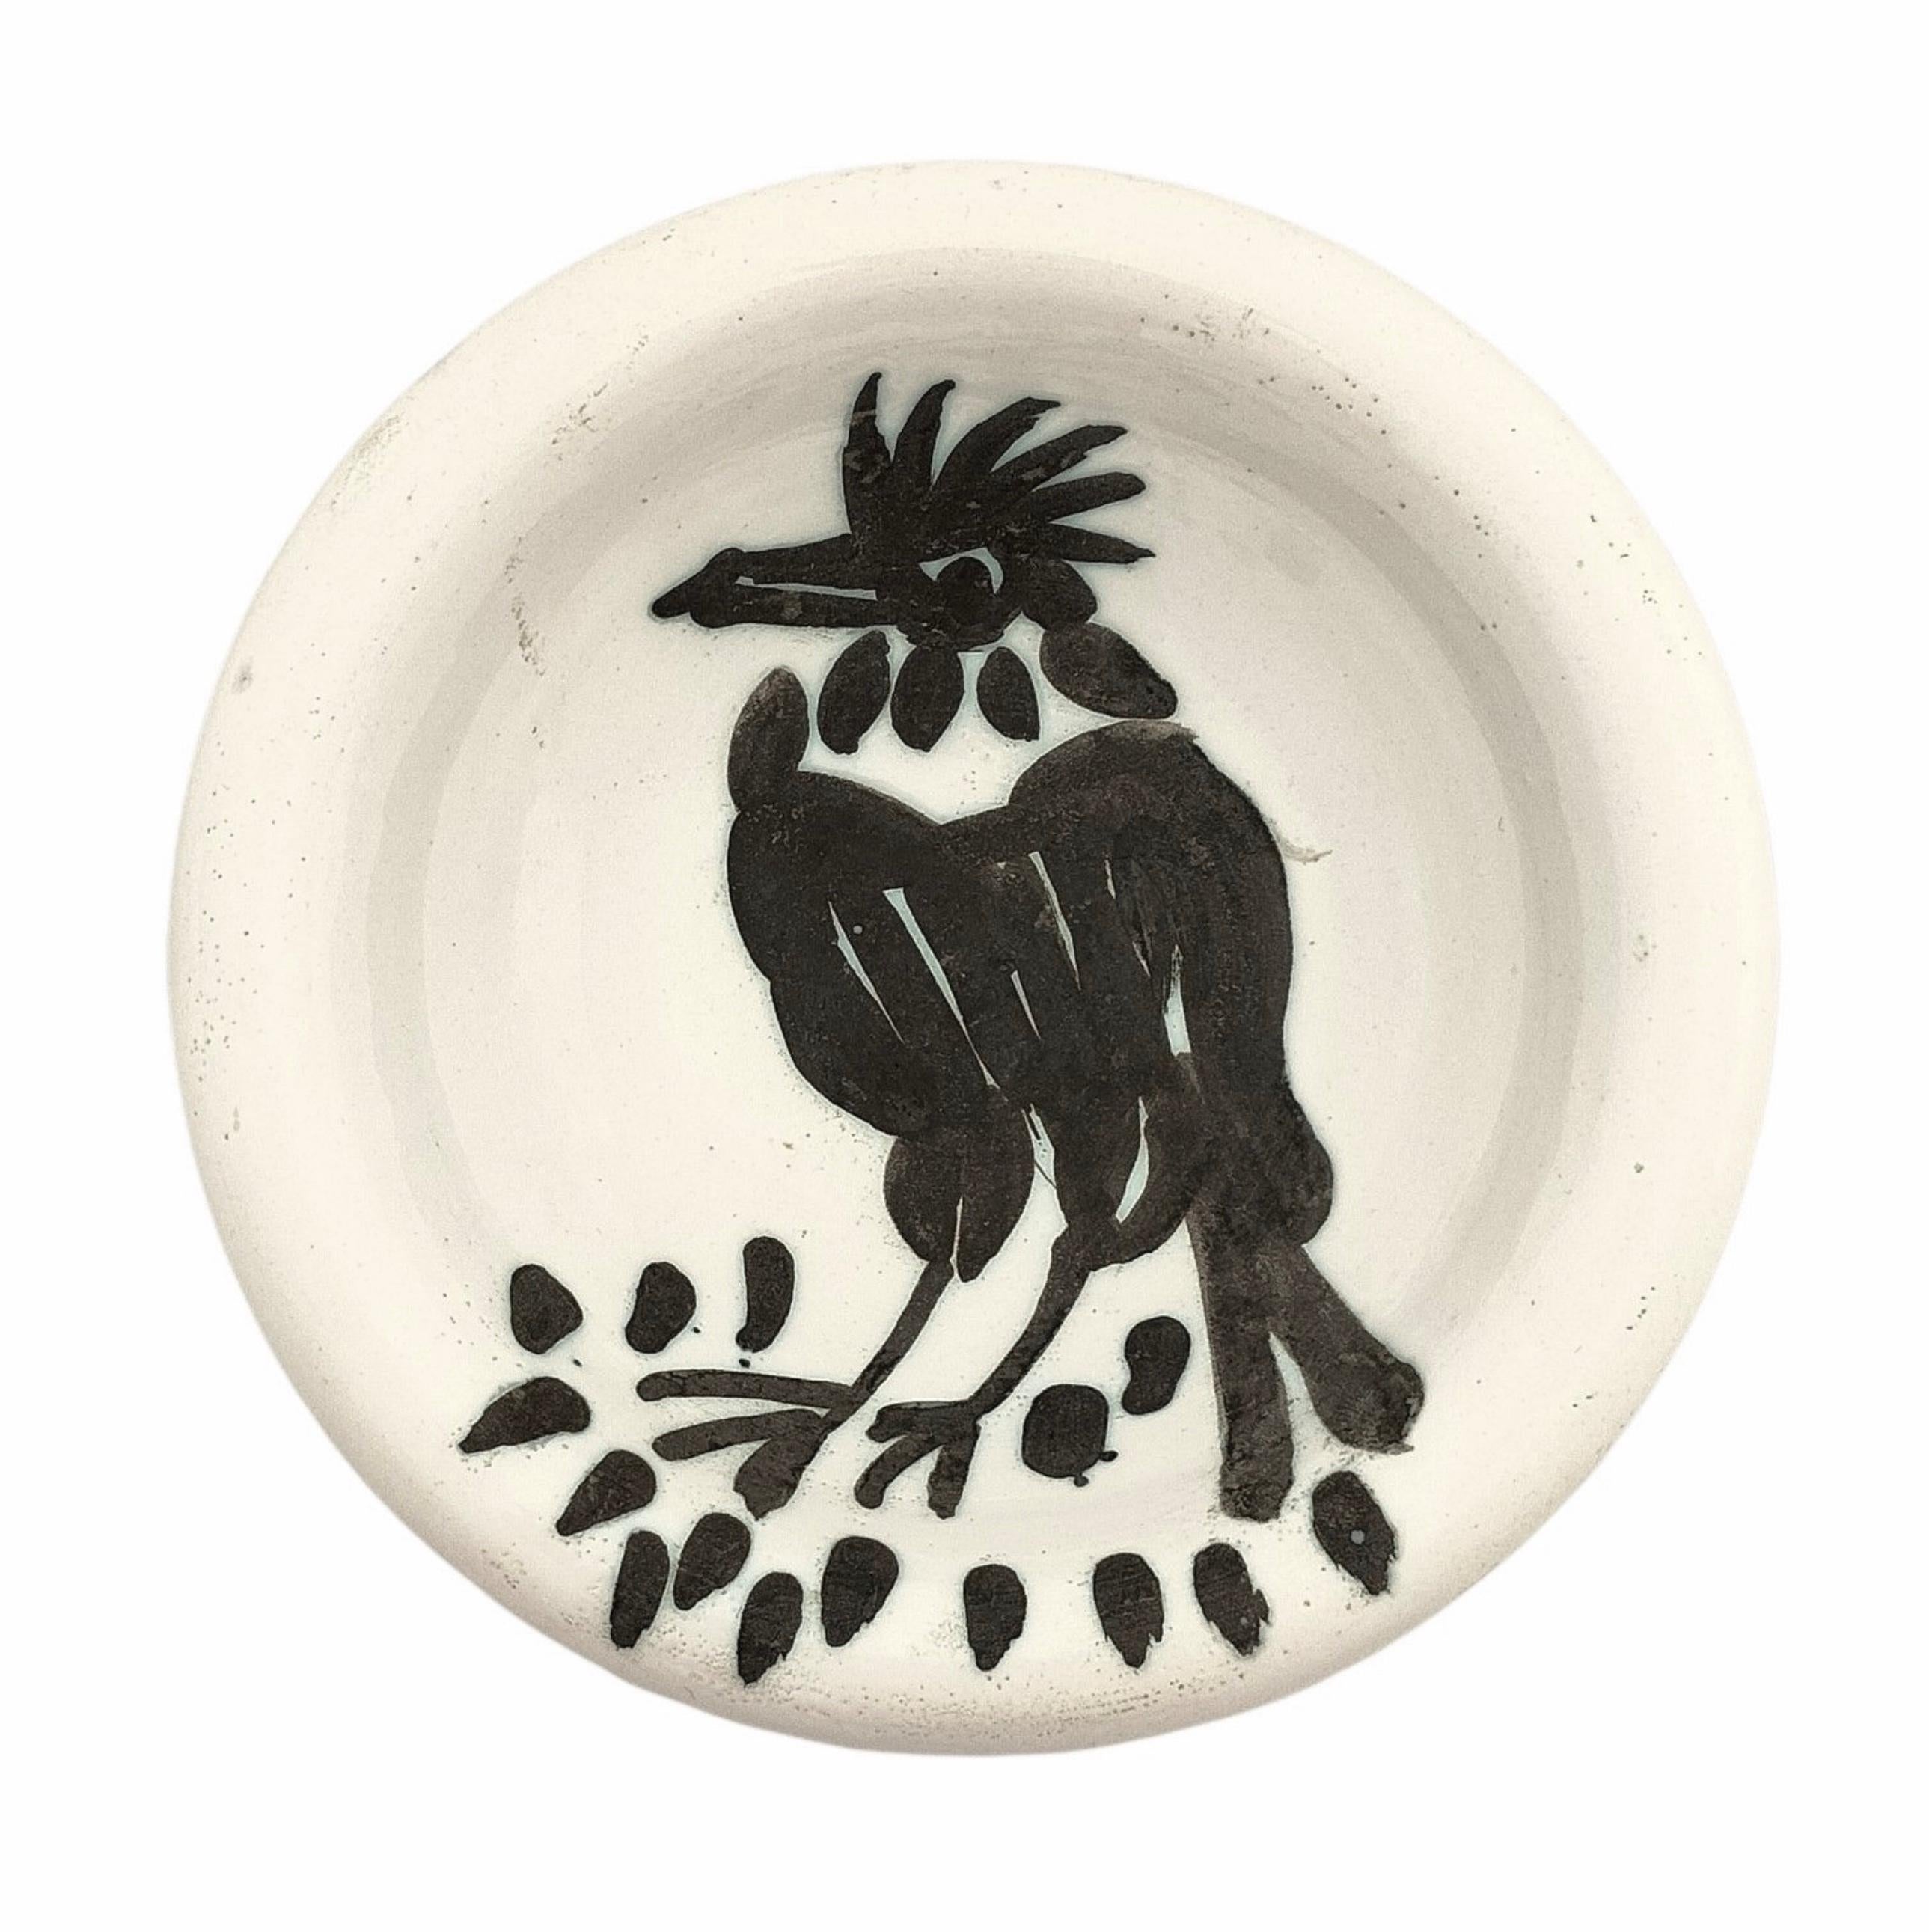 Oiseau à la Huppe, Picasso, ashtray, design, ceramic, animals, art, postwar